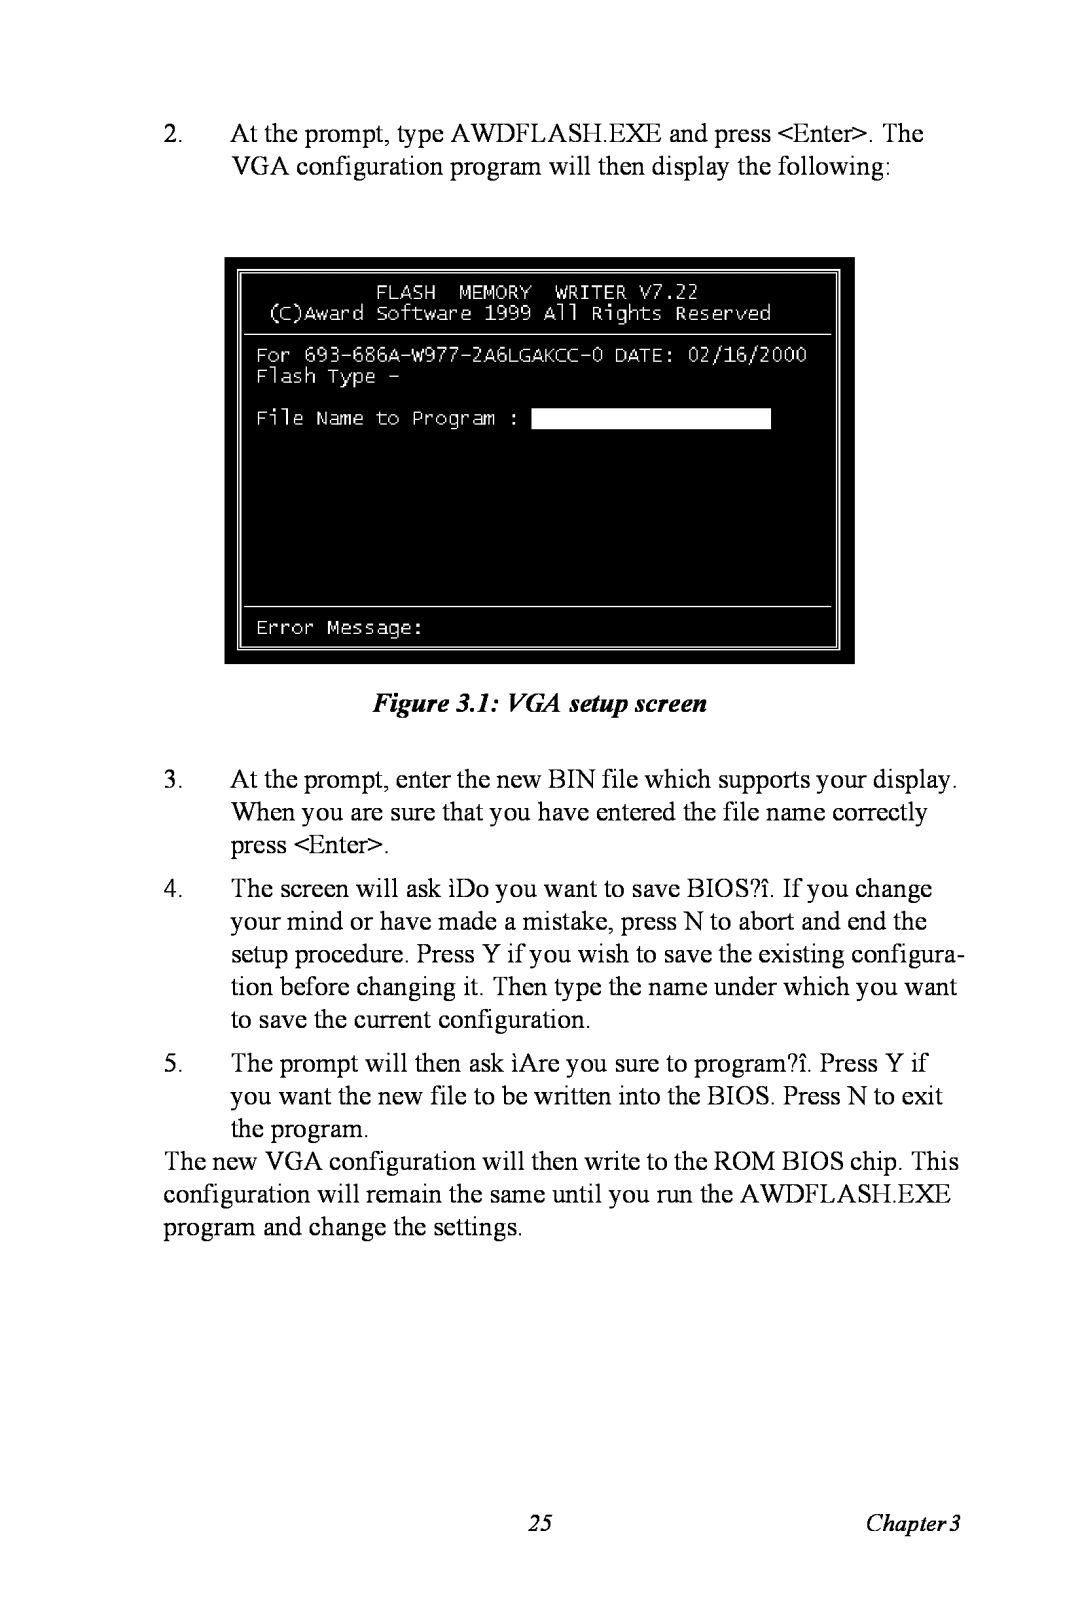 Intel PCM-3370 user manual 1 VGA setup screen 